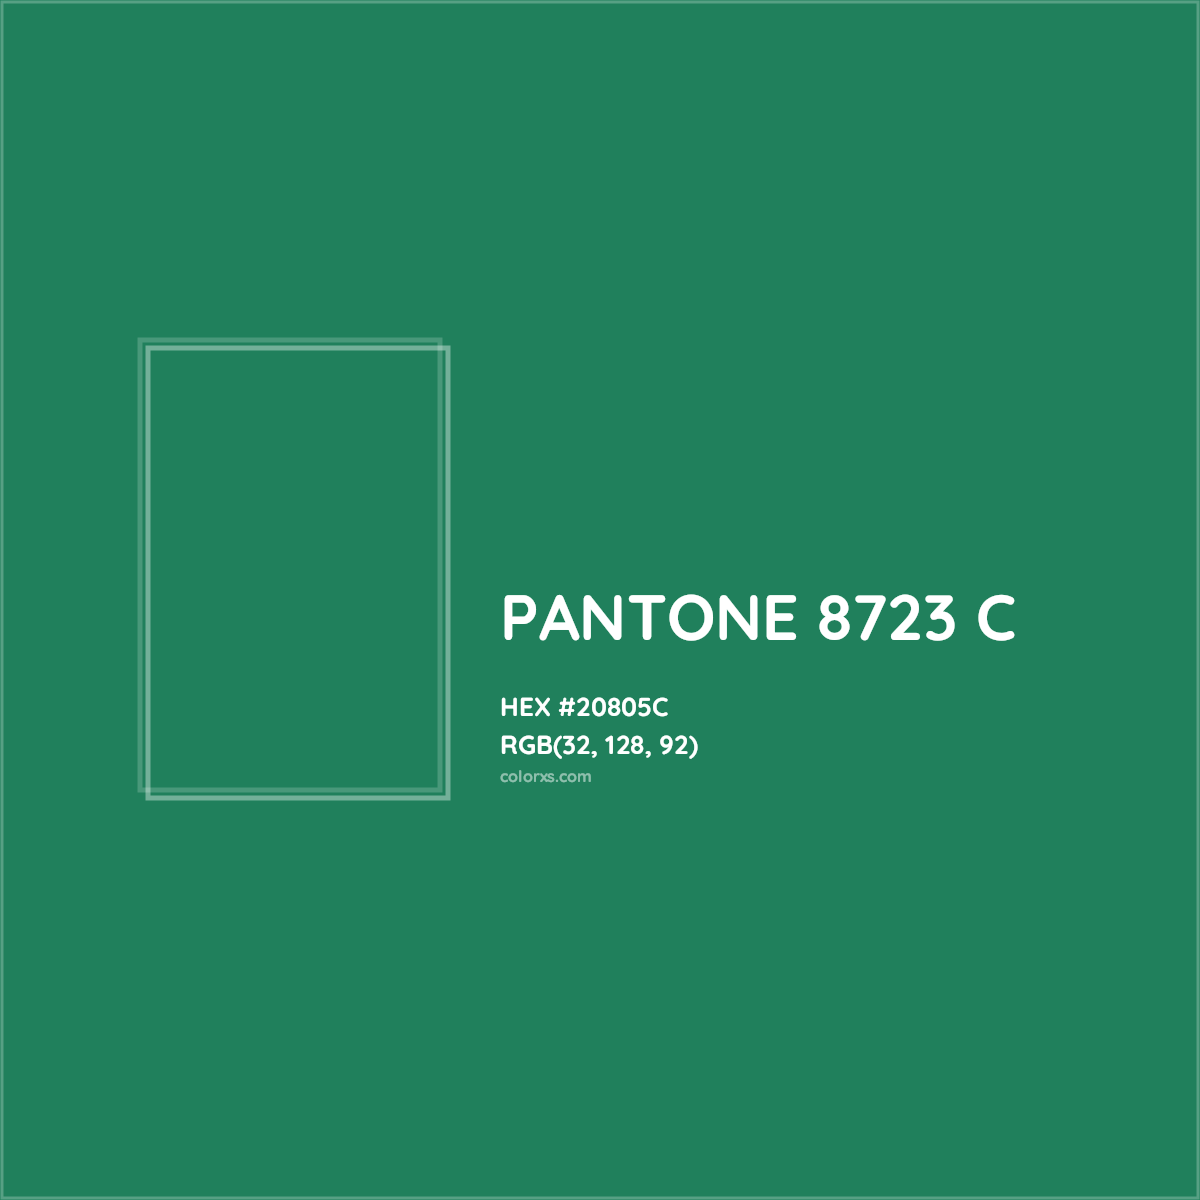 HEX #20805C PANTONE 8723 C CMS Pantone PMS - Color Code